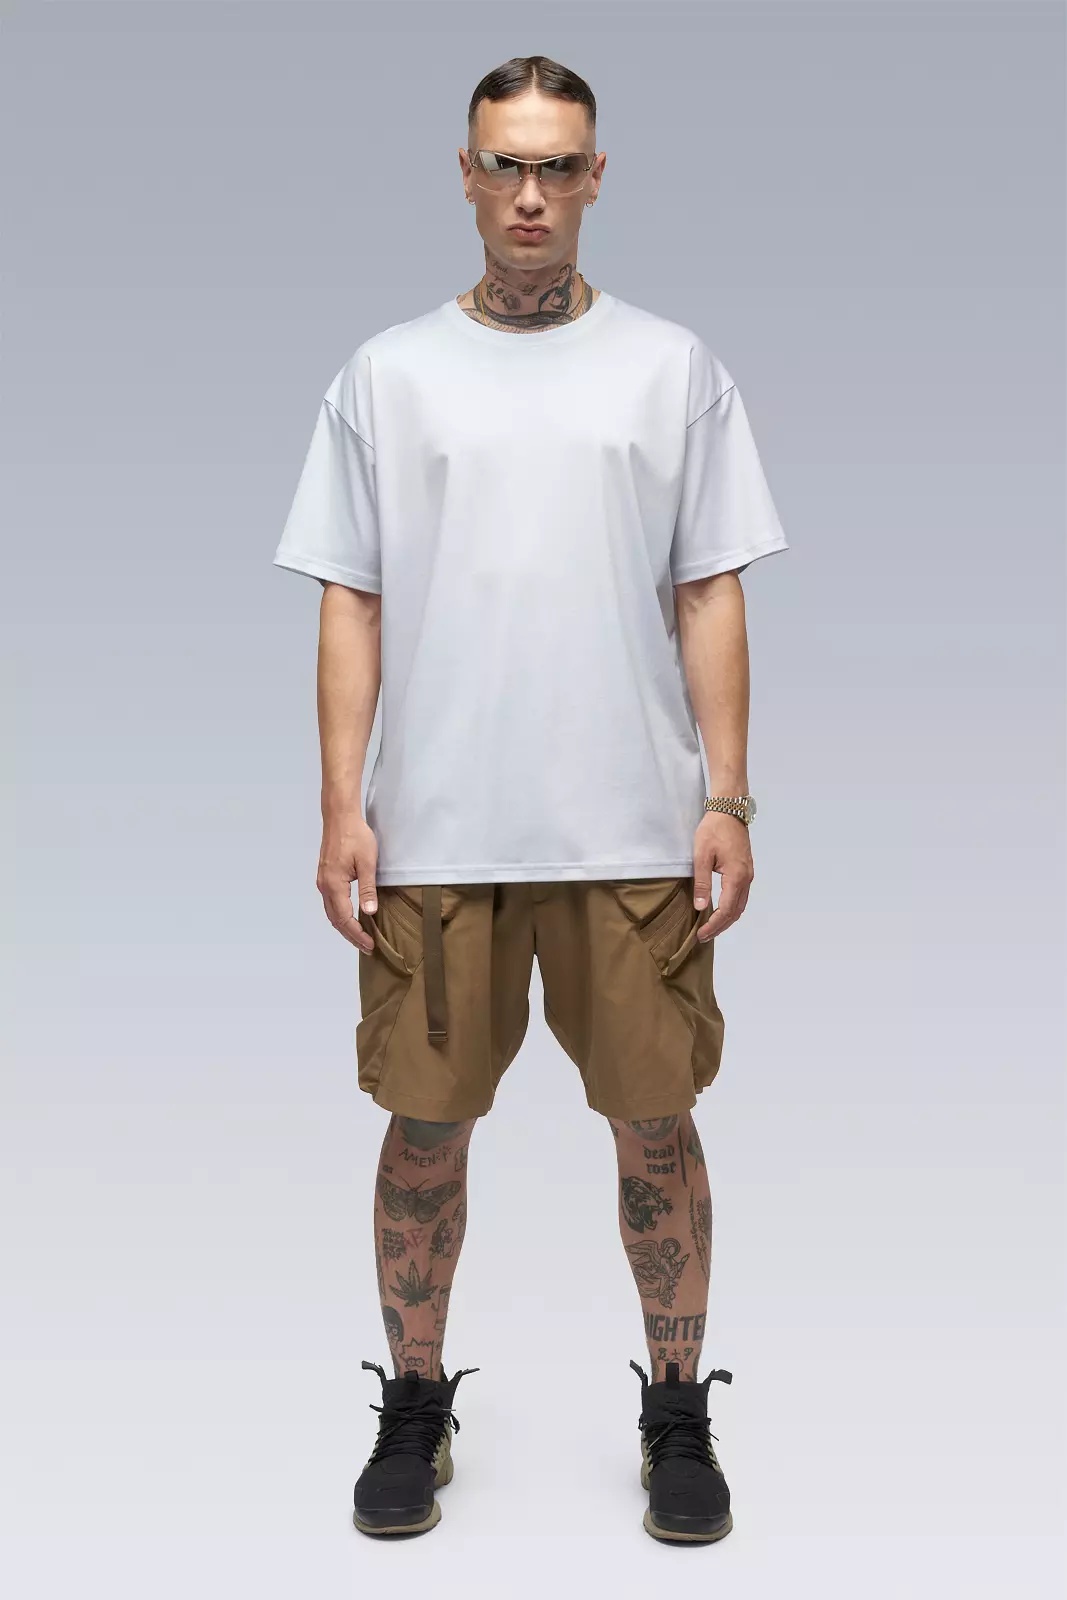 S24-PR-A 100% Cotton Mercerized Short Sleeve T-shirt White - 1